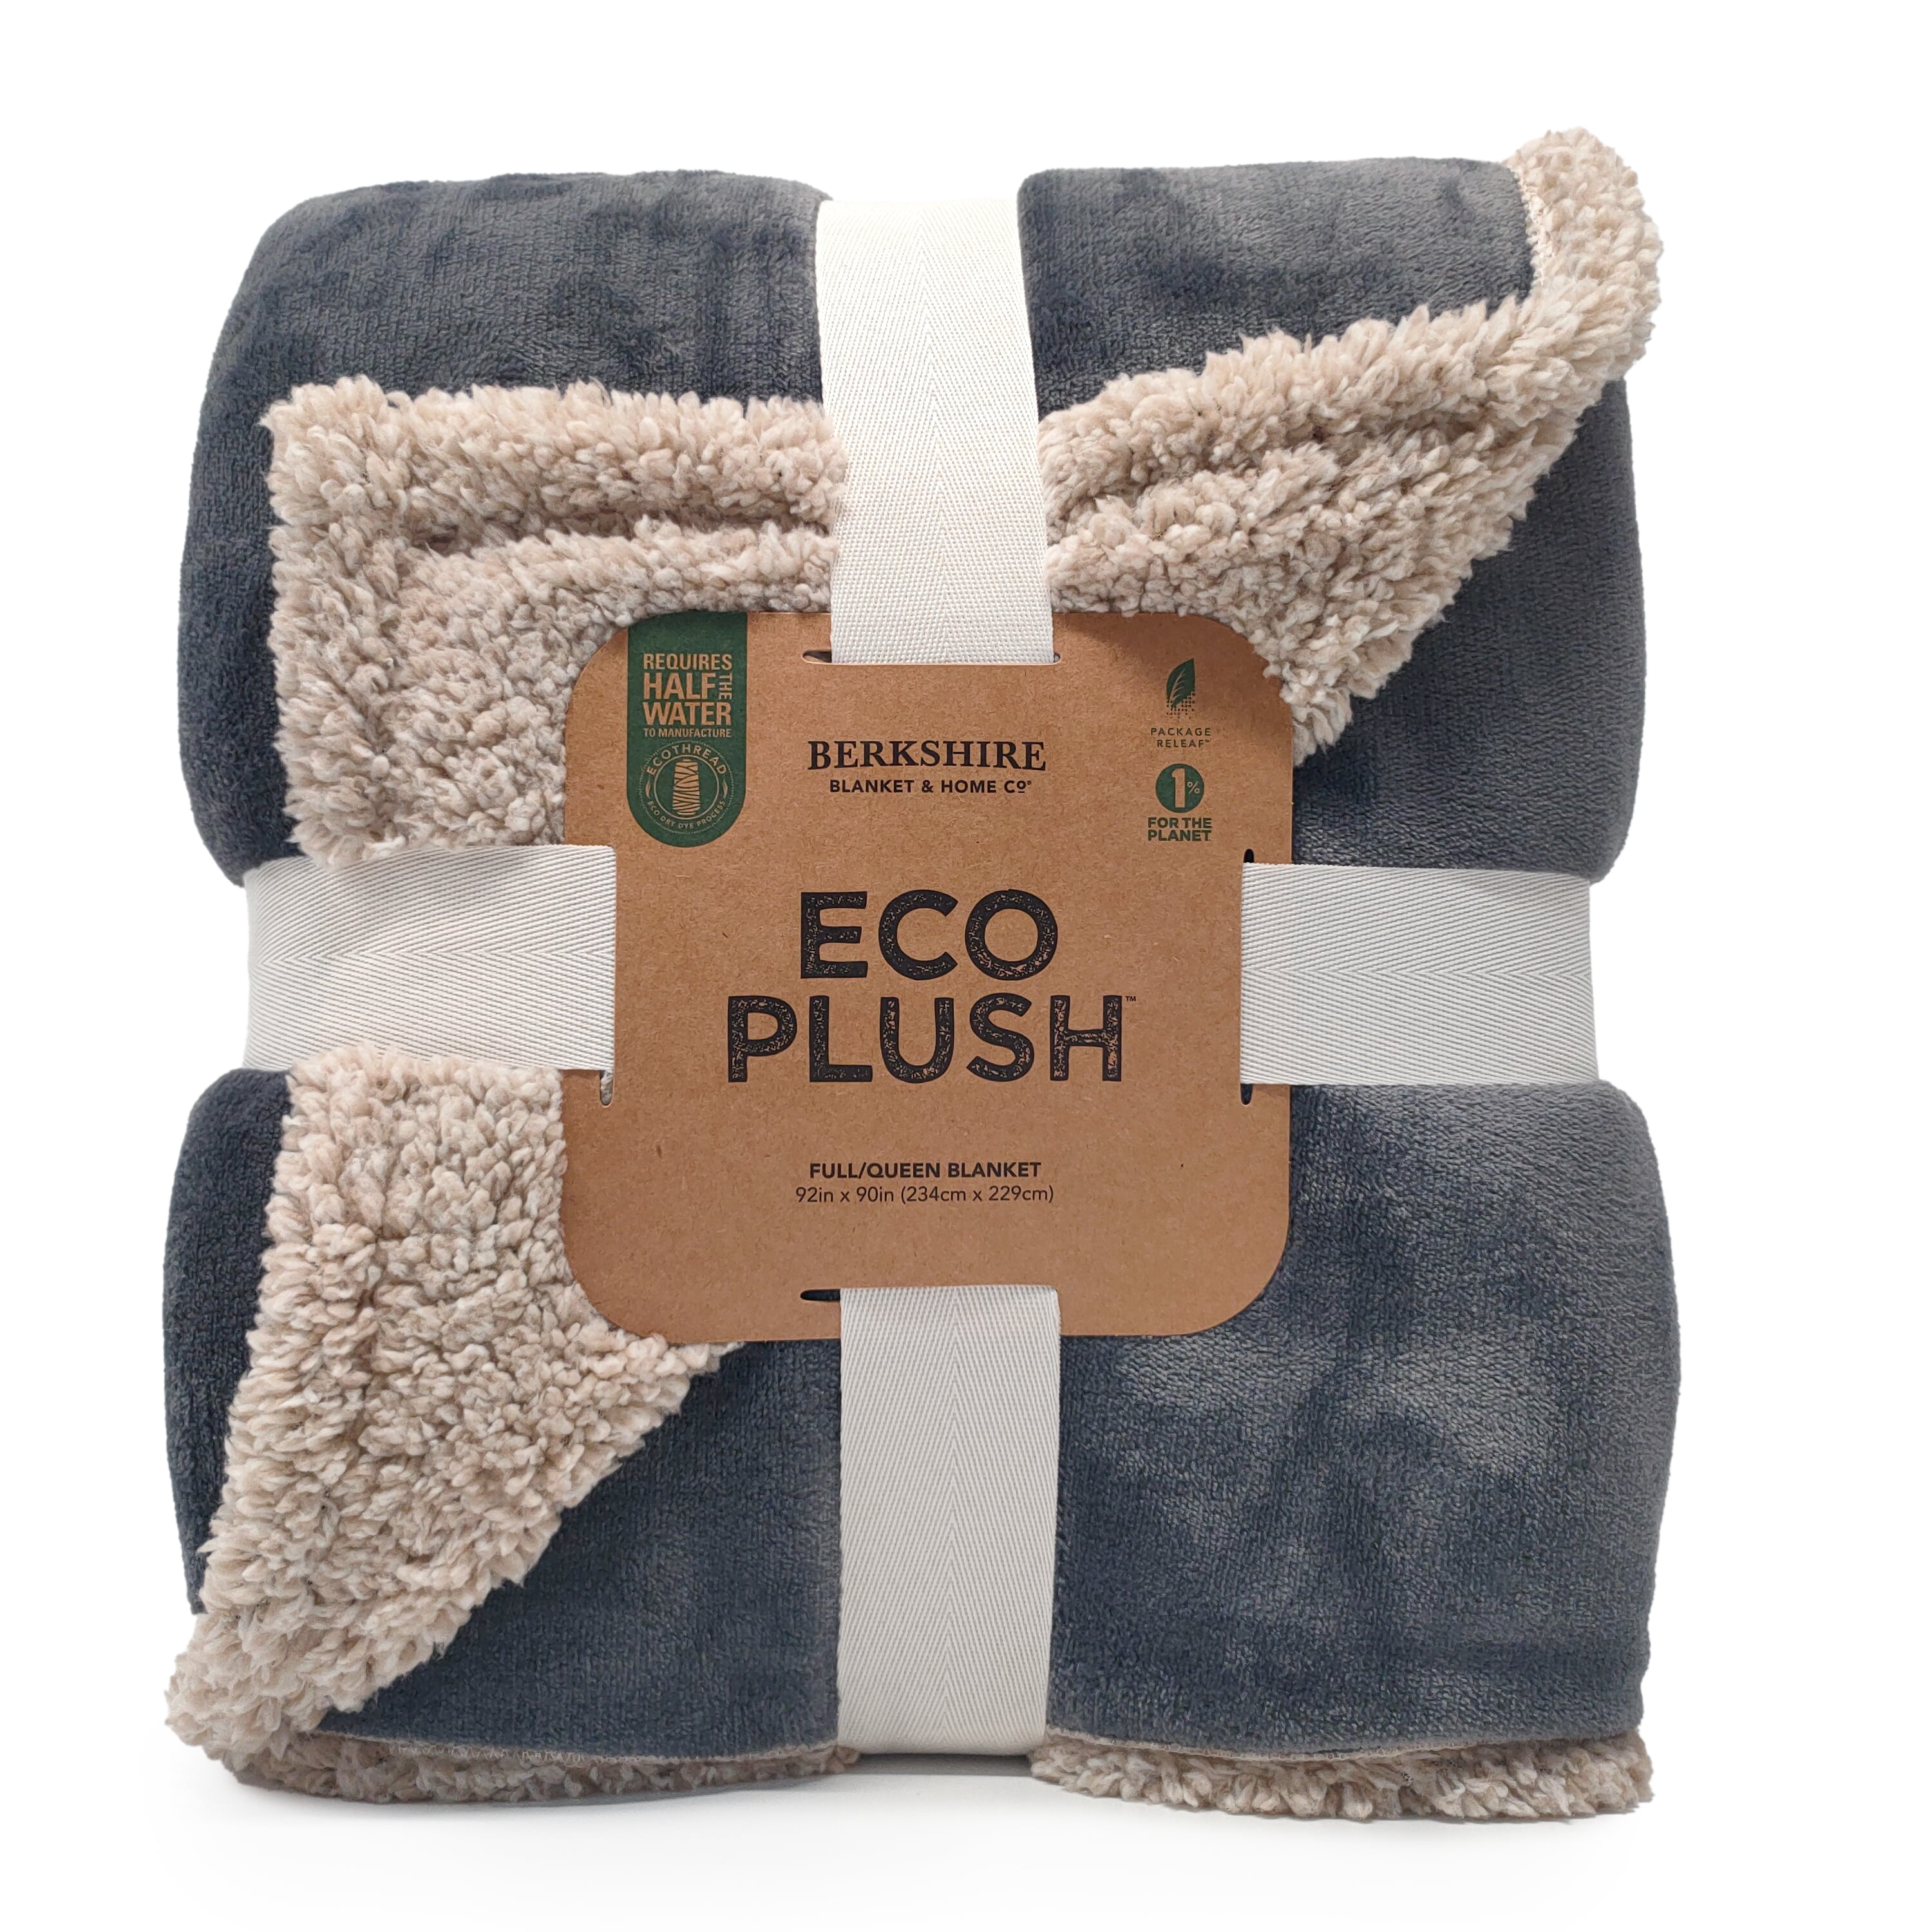 Koyou Super Soft Warm &Cozy Beige Plush Sherpa Blanket Throw Queen or Full Size 